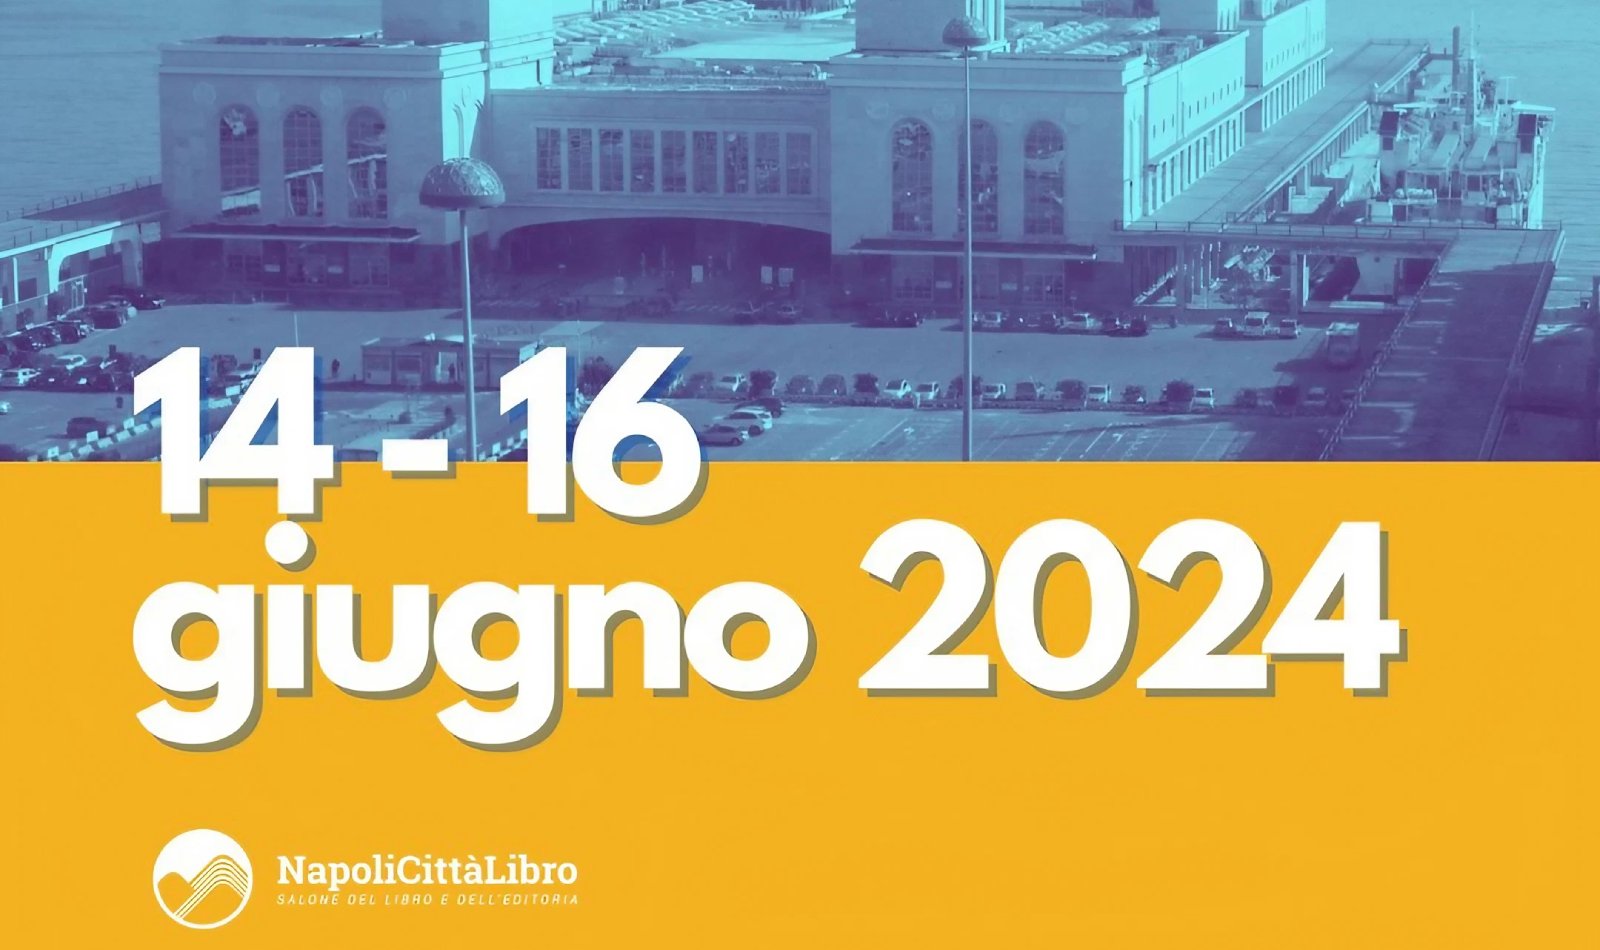 Neapel Stadtbuch 2024 Seestation